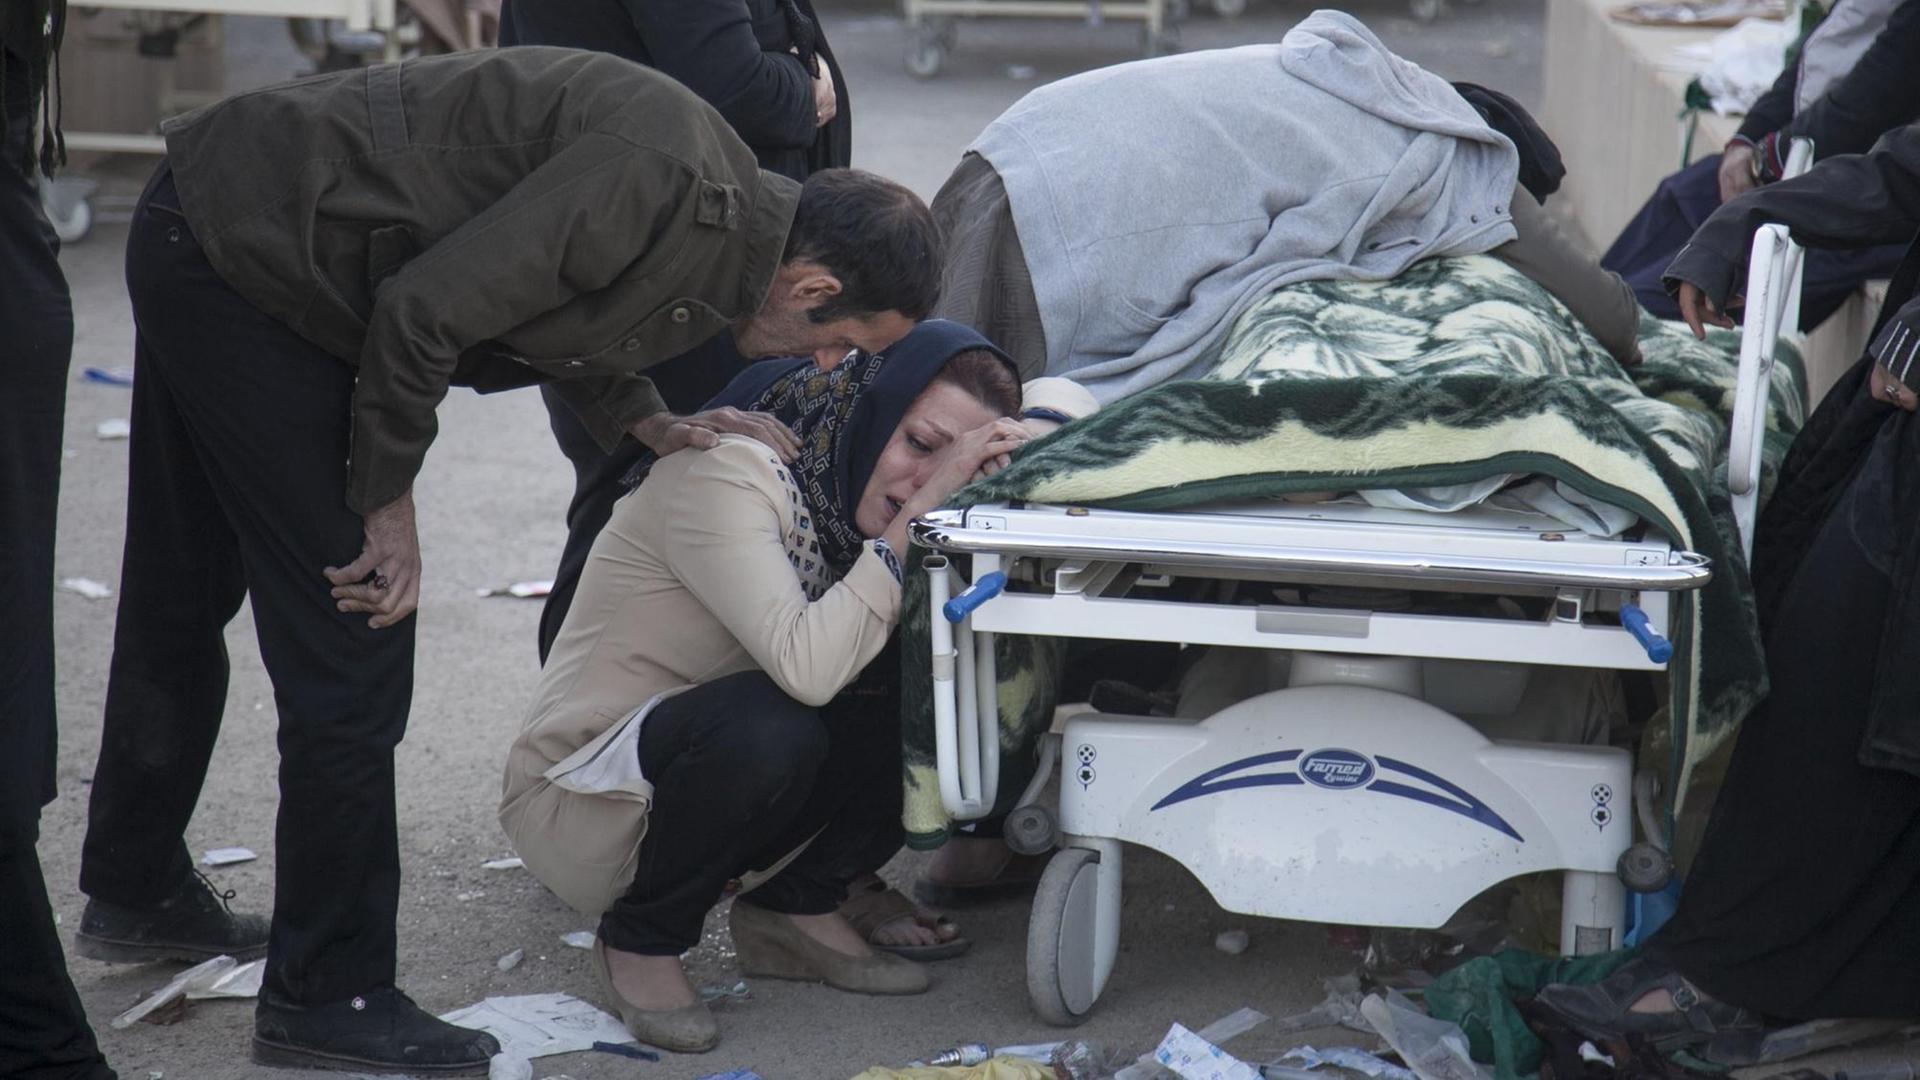 Iranians mourn over the body of a victim following a 7.3-magnitude earthquake in Sarpol-e Zahab in Iran's western province of Kermanshah on November 13, 2017. / AFP PHOTO / TASNIM NEWS / Farzad MENATI